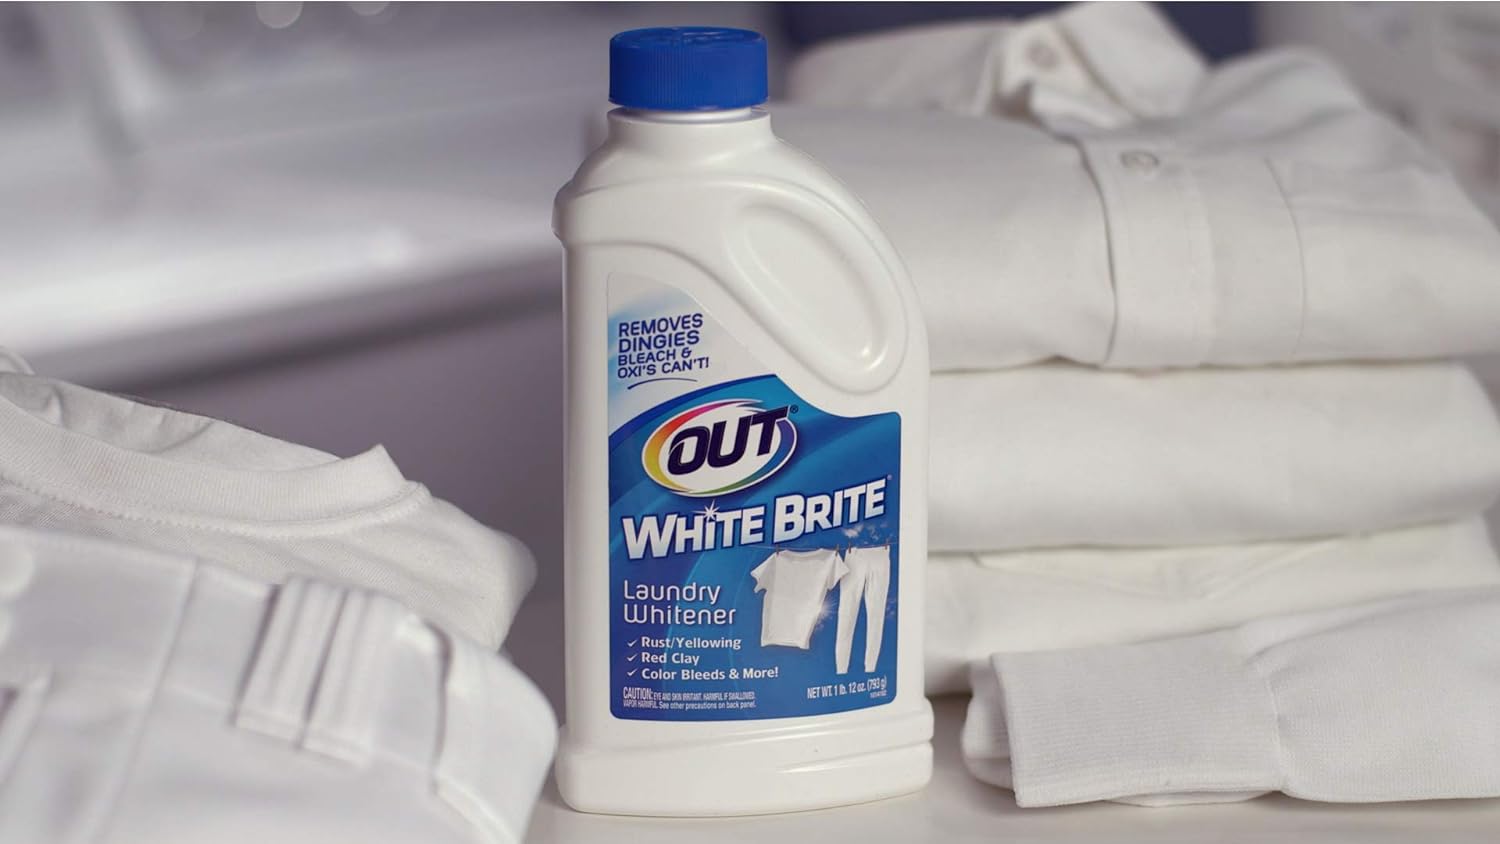 OUT White Brite Laundry Whitener Powder, 1 lb 12 oz, 2 Bottles : Home & Kitchen